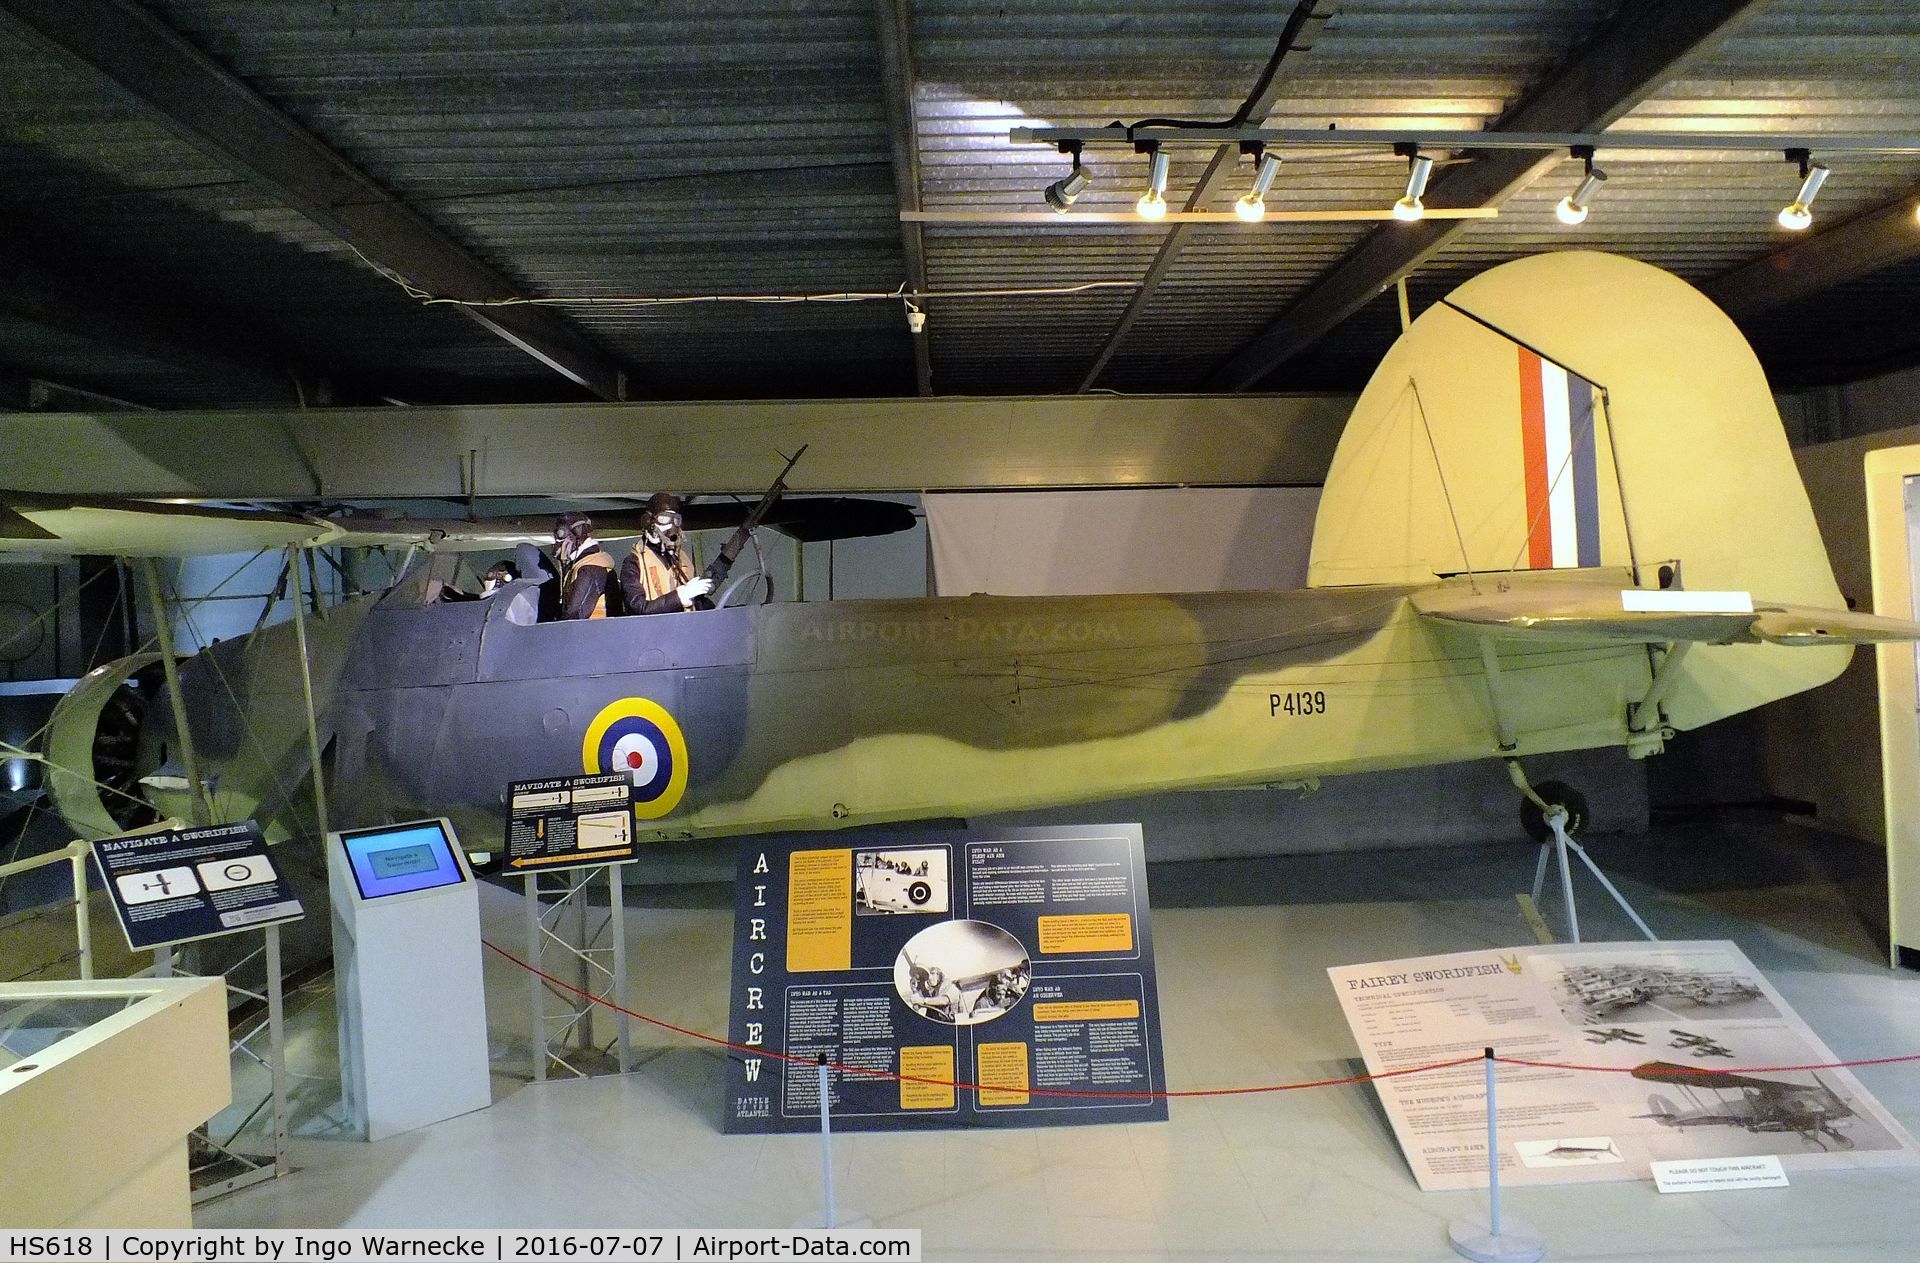 HS618, Fairey Swordfish Mk.II C/N Not found HS618, Fairey Swordfish Mk II, displayed as P4149 at the FAA Museum, Yeovilton